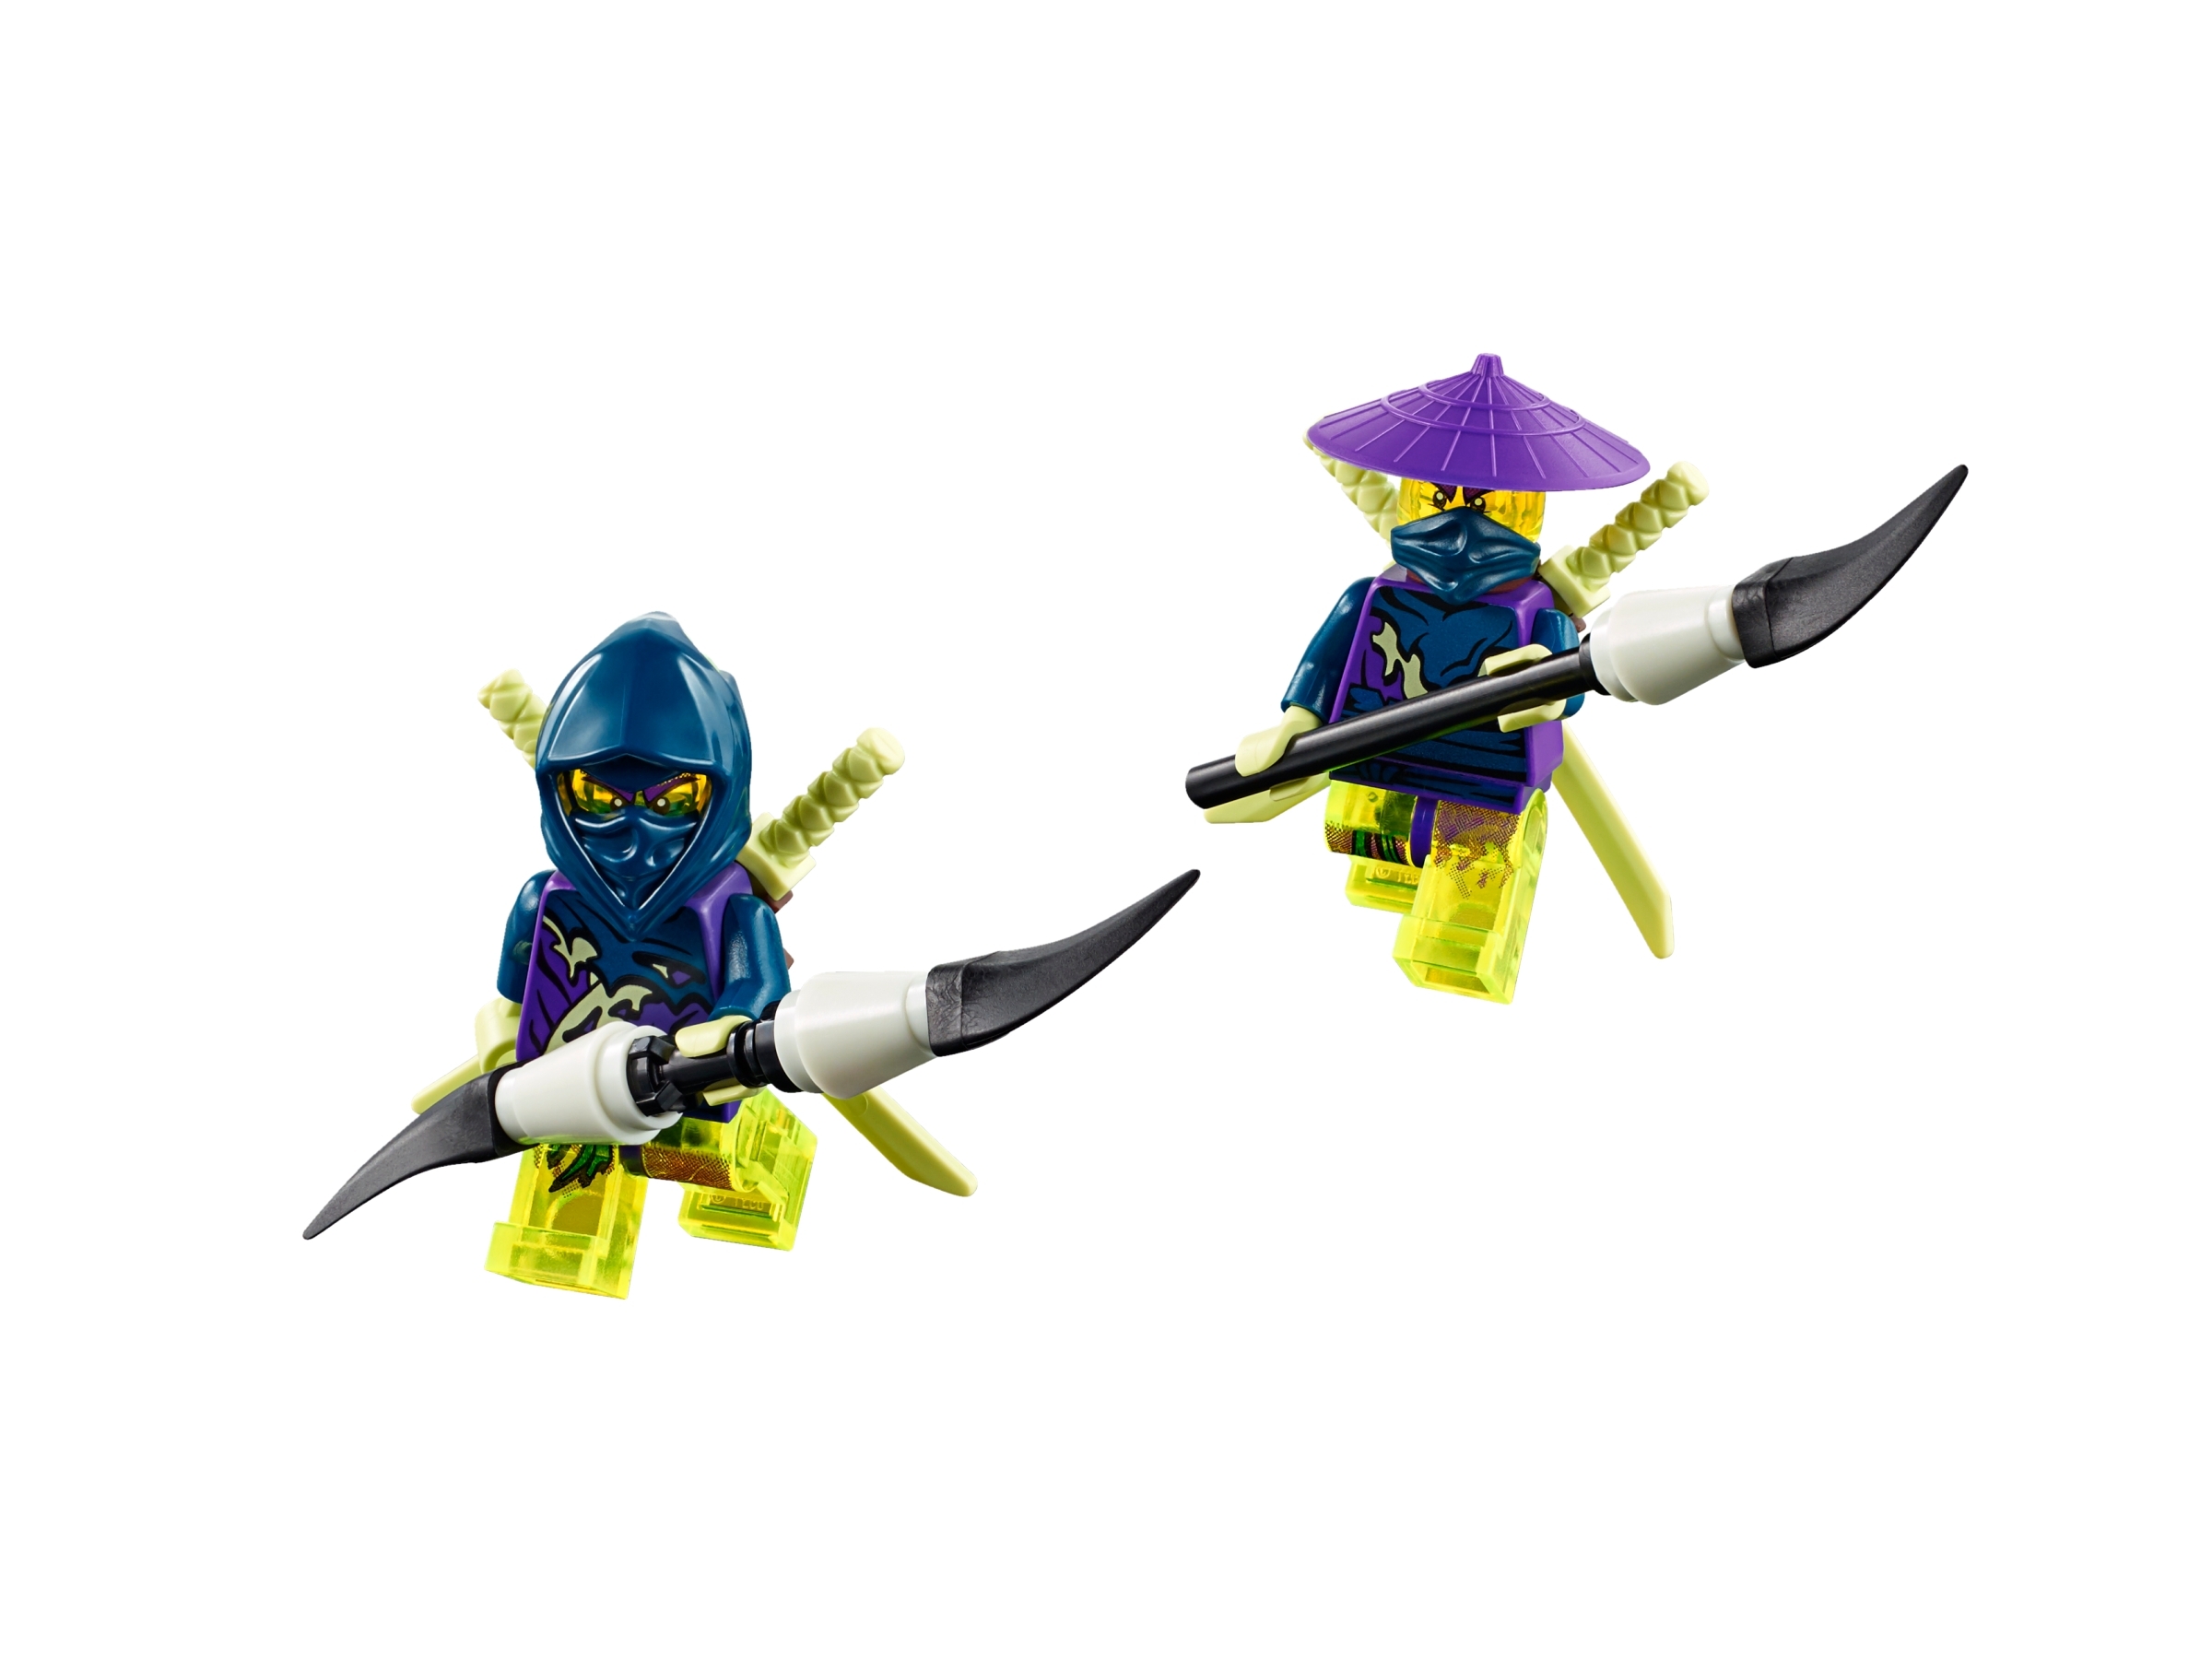 Lego New Ninjago Minifigure Chain Master Wrayth From Set 70736